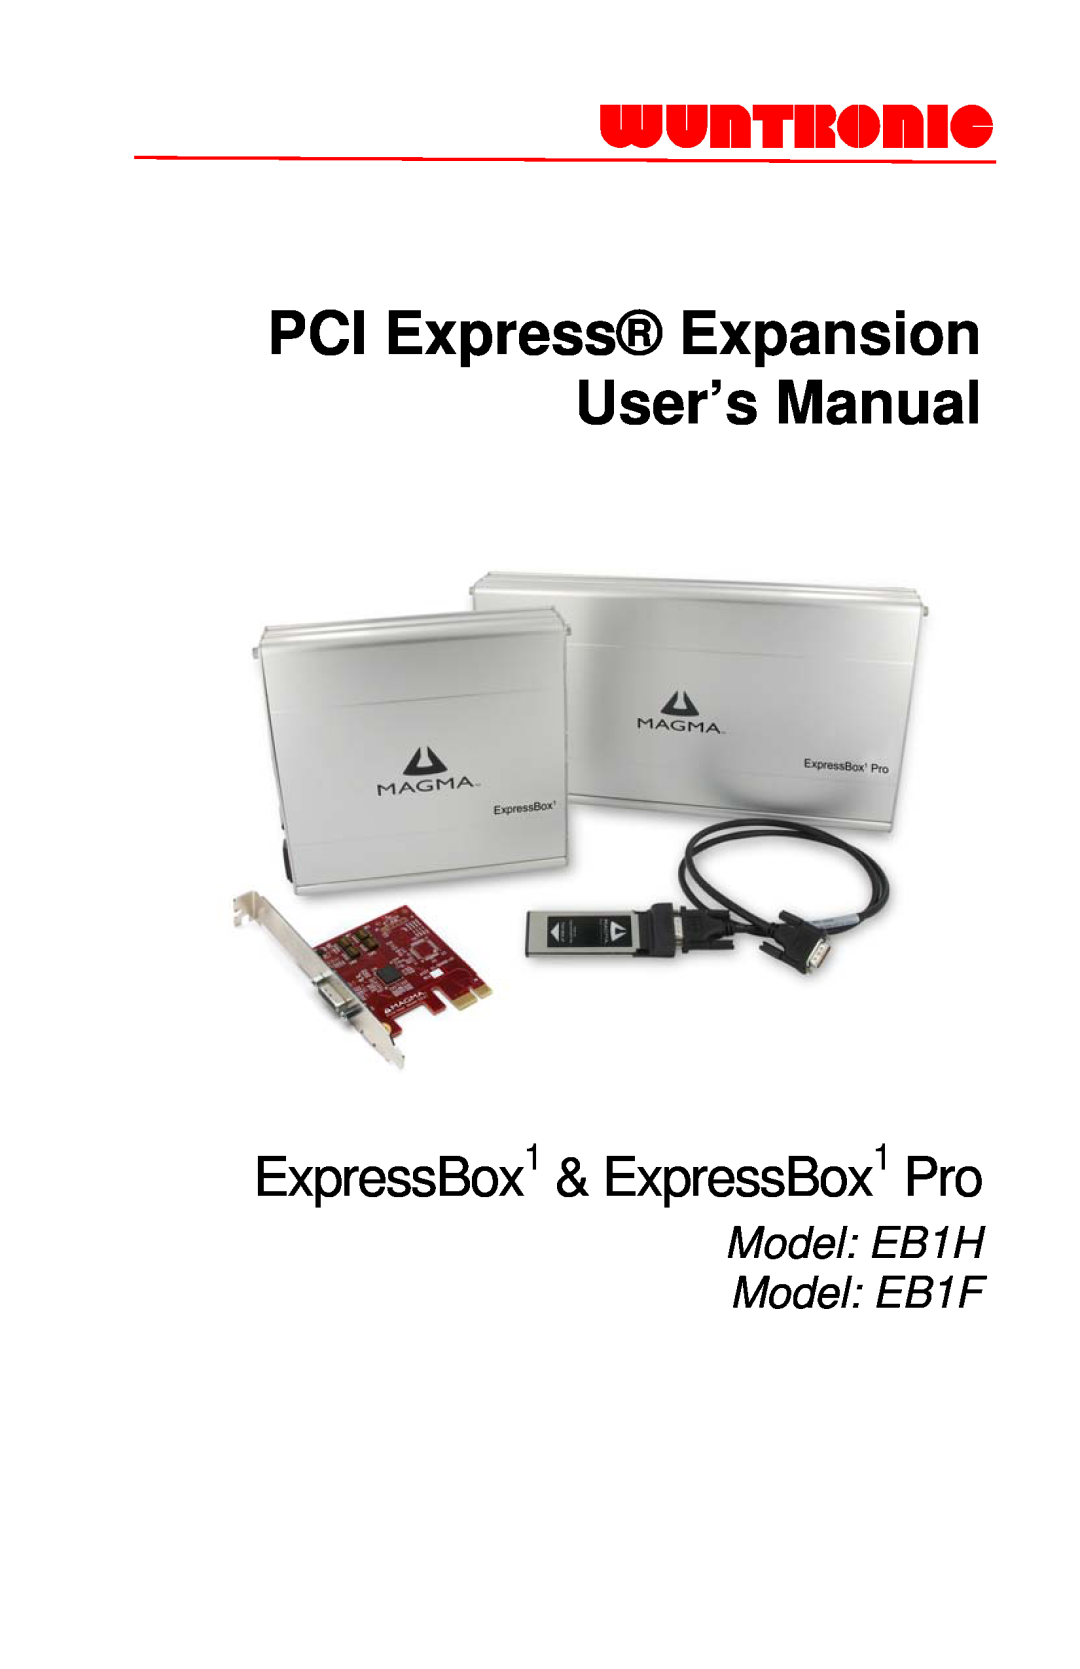 Compaq user manual PCI Express Expansion User’s Manual, ExpressBox1 & ExpressBox1 Pro, Model EB1H Model EB1F 